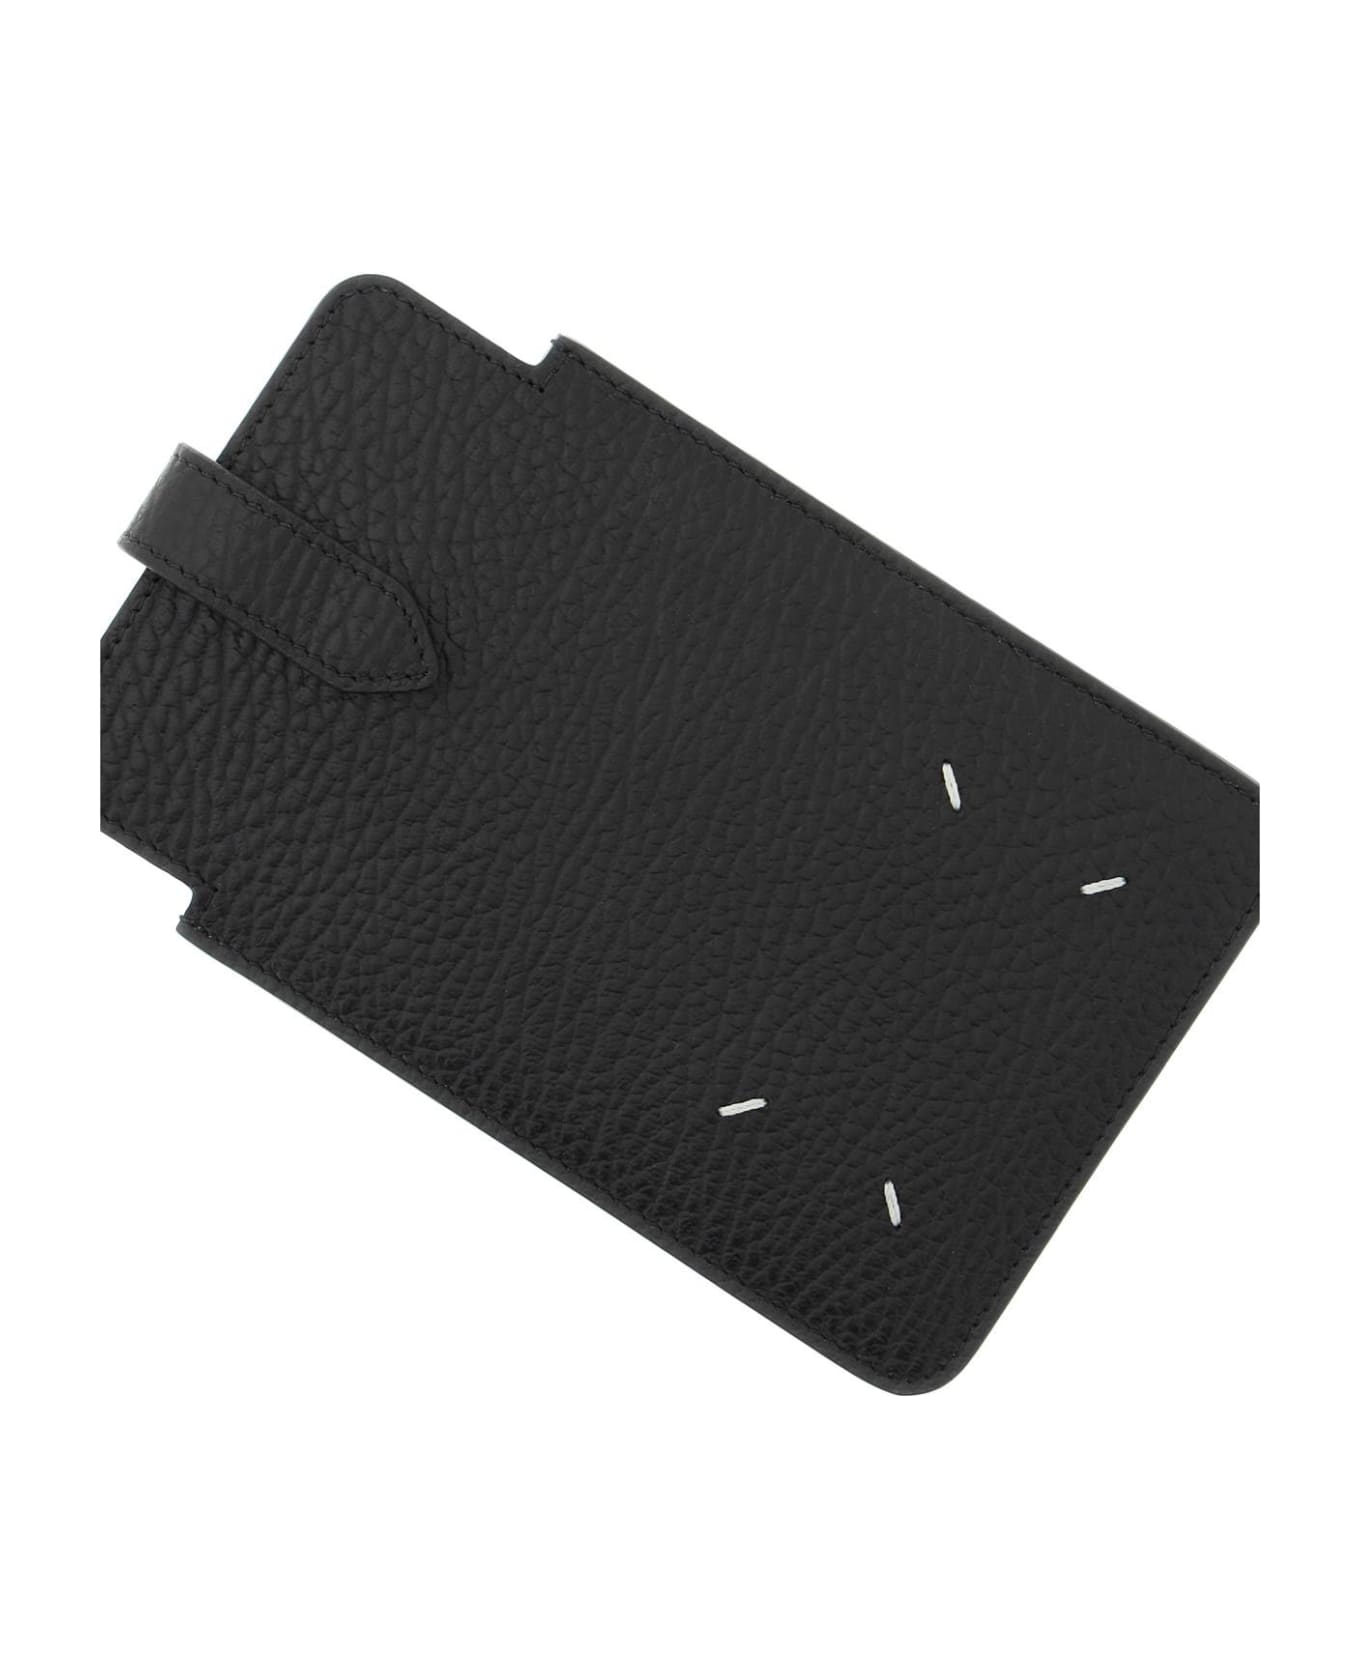 Maison Margiela Grained Leather Smartphone Case - Nero